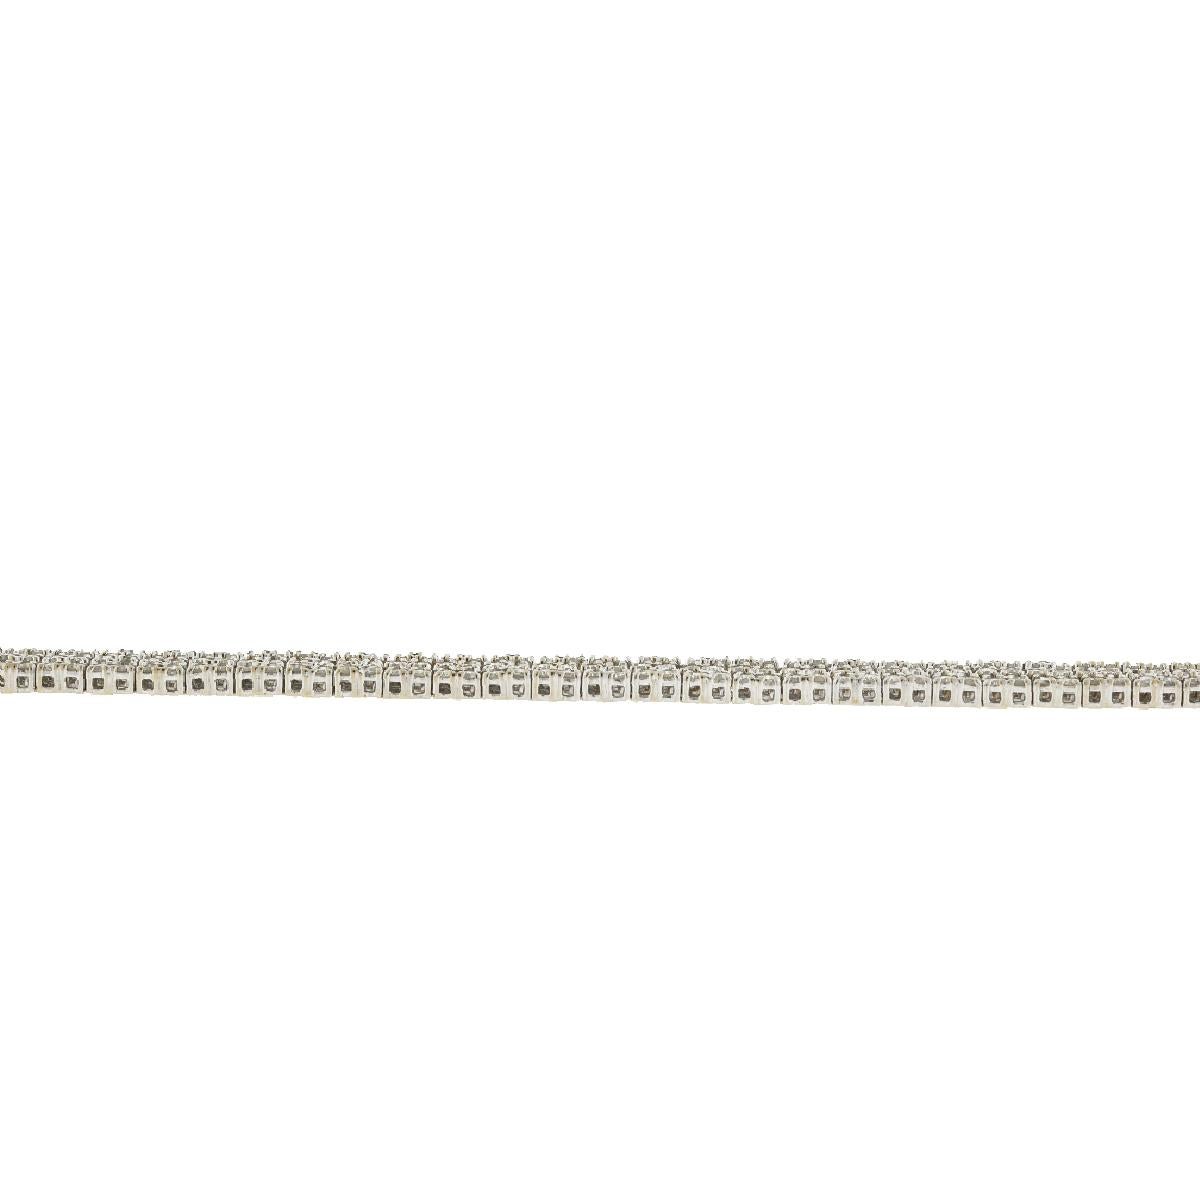 Company-N/A
Style-3 Strand Diamond Bracelet 
Metal-18k White Gold 
Stones-Diamonds Approx. 3.45 ctw
Weight-14.57 G
Length-7.50